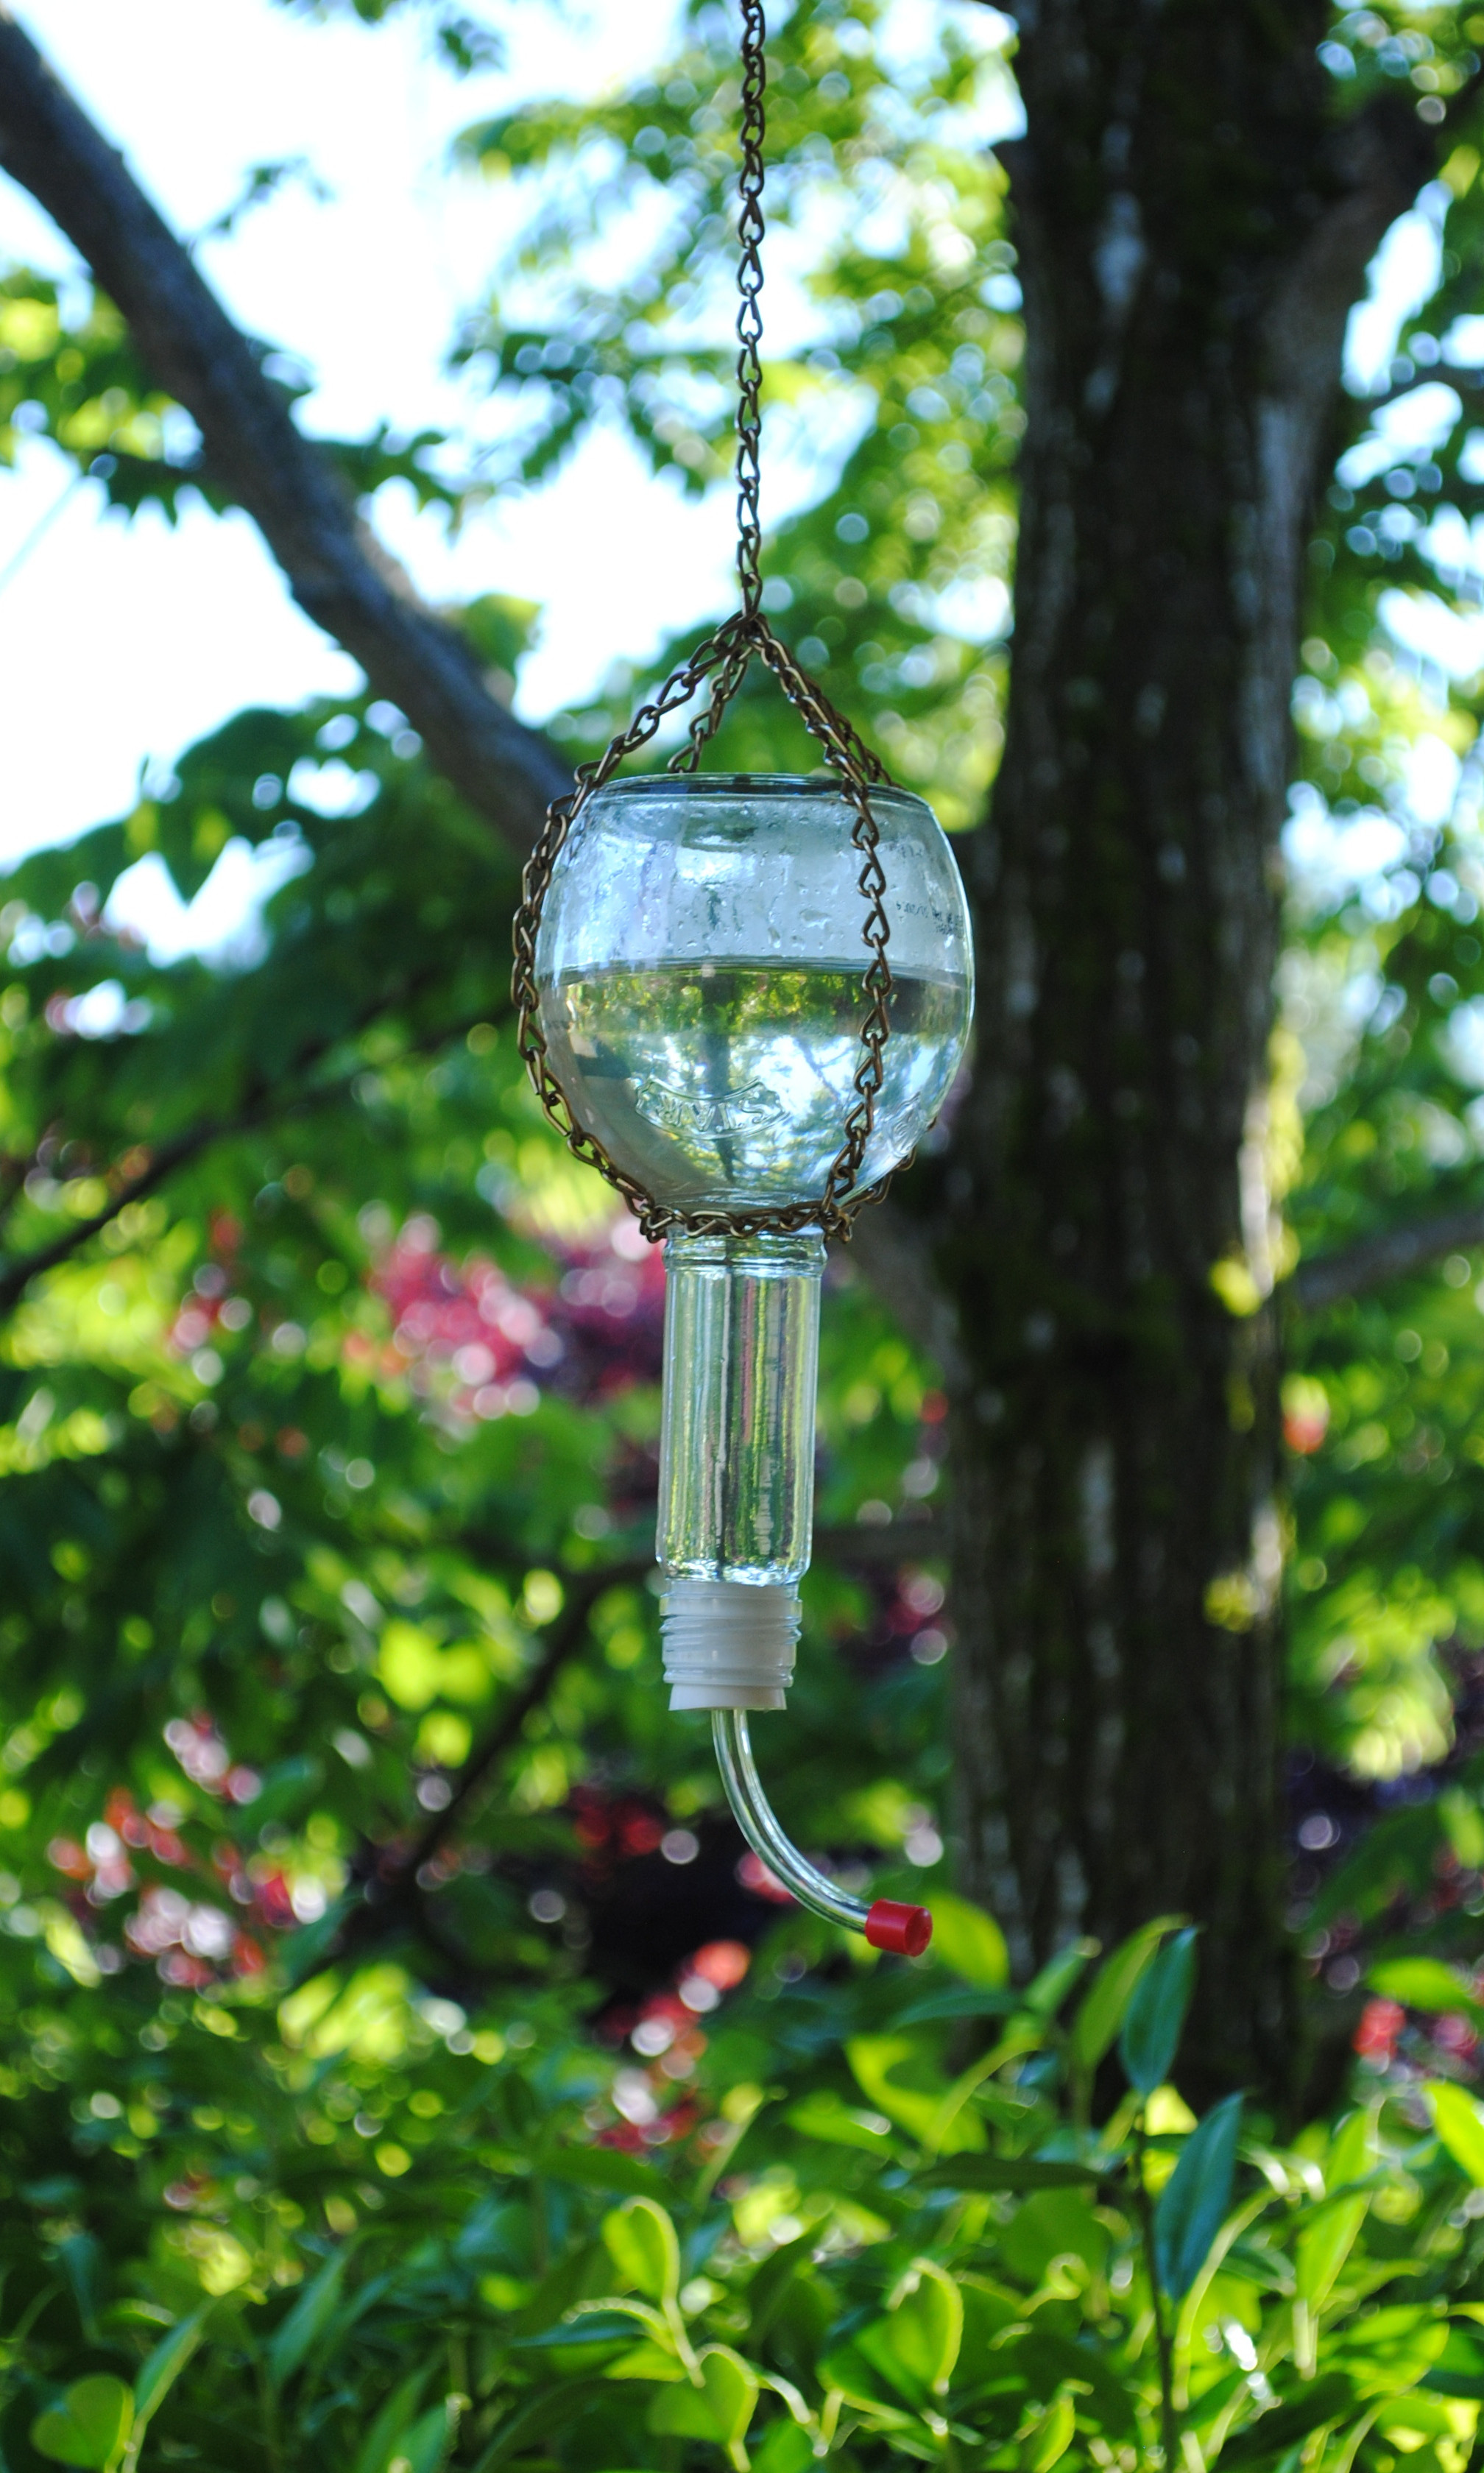 Best ideas about DIY Wine Bottle Hummingbird Feeder
. Save or Pin DIY Glass Bottle Hummingbird Feeder Now.